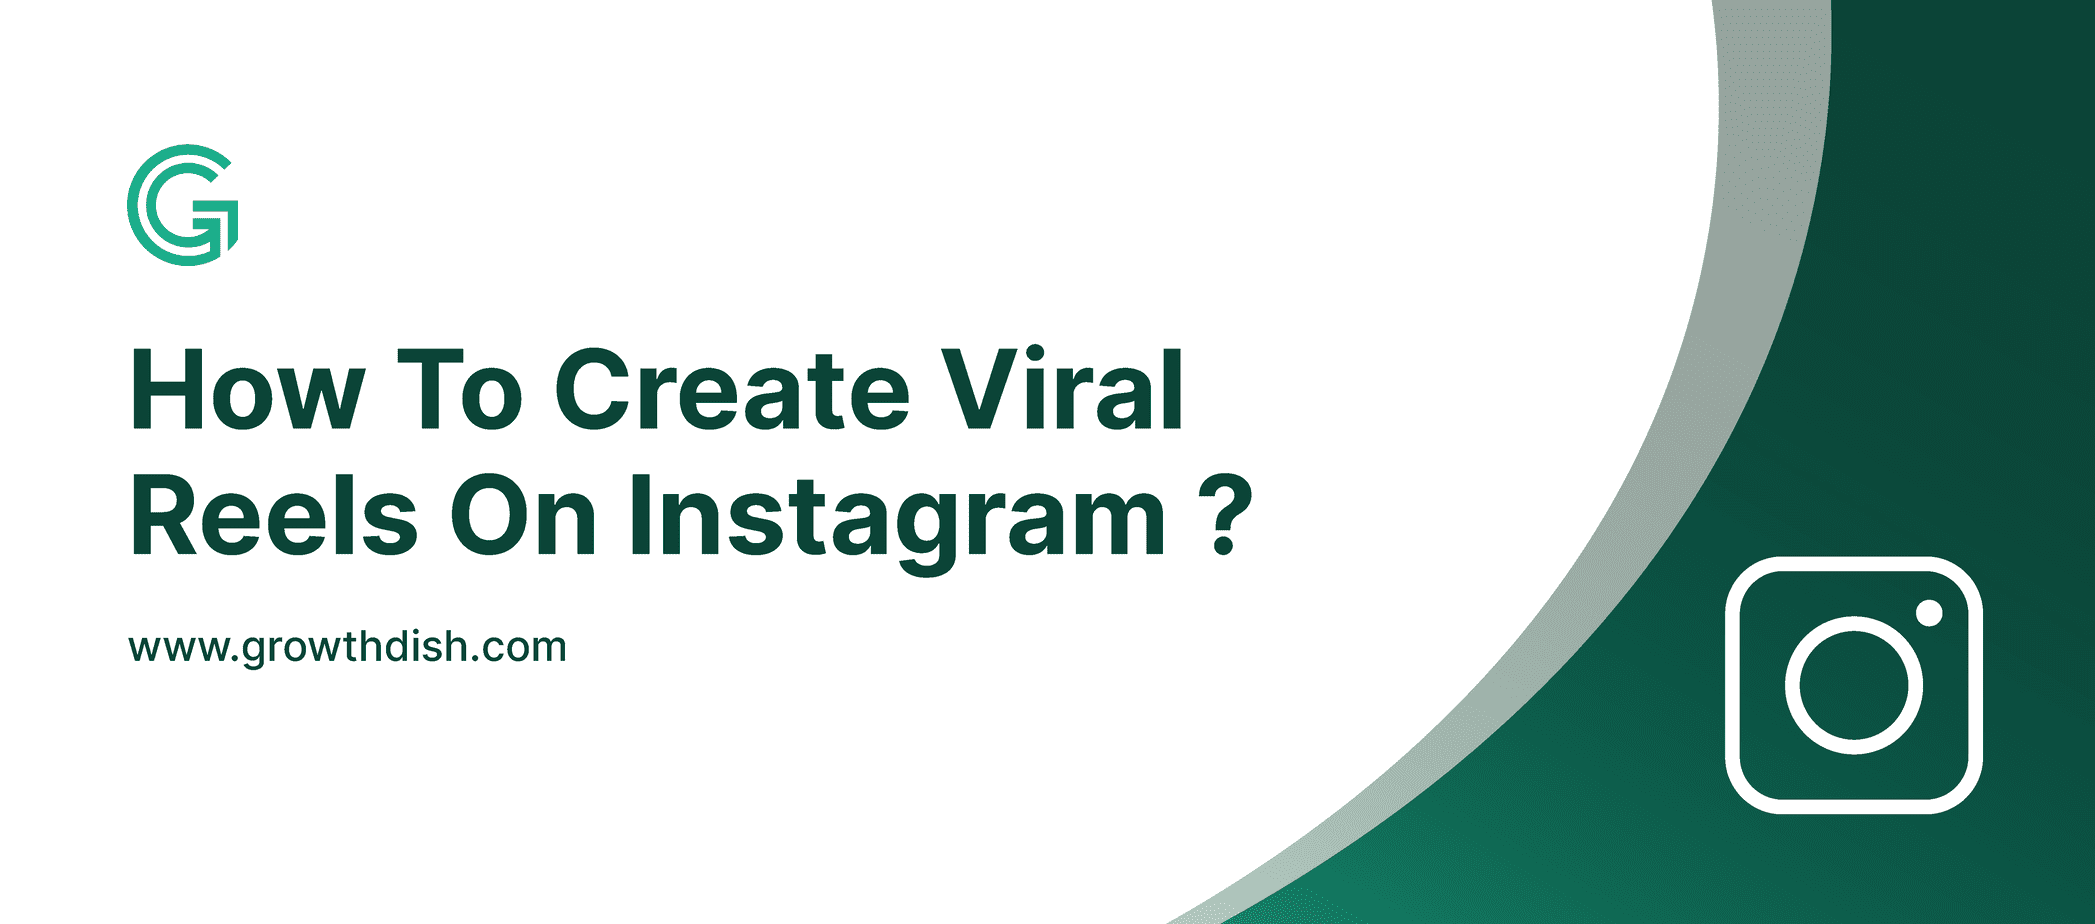 How To Create Viral Reels On Instagram